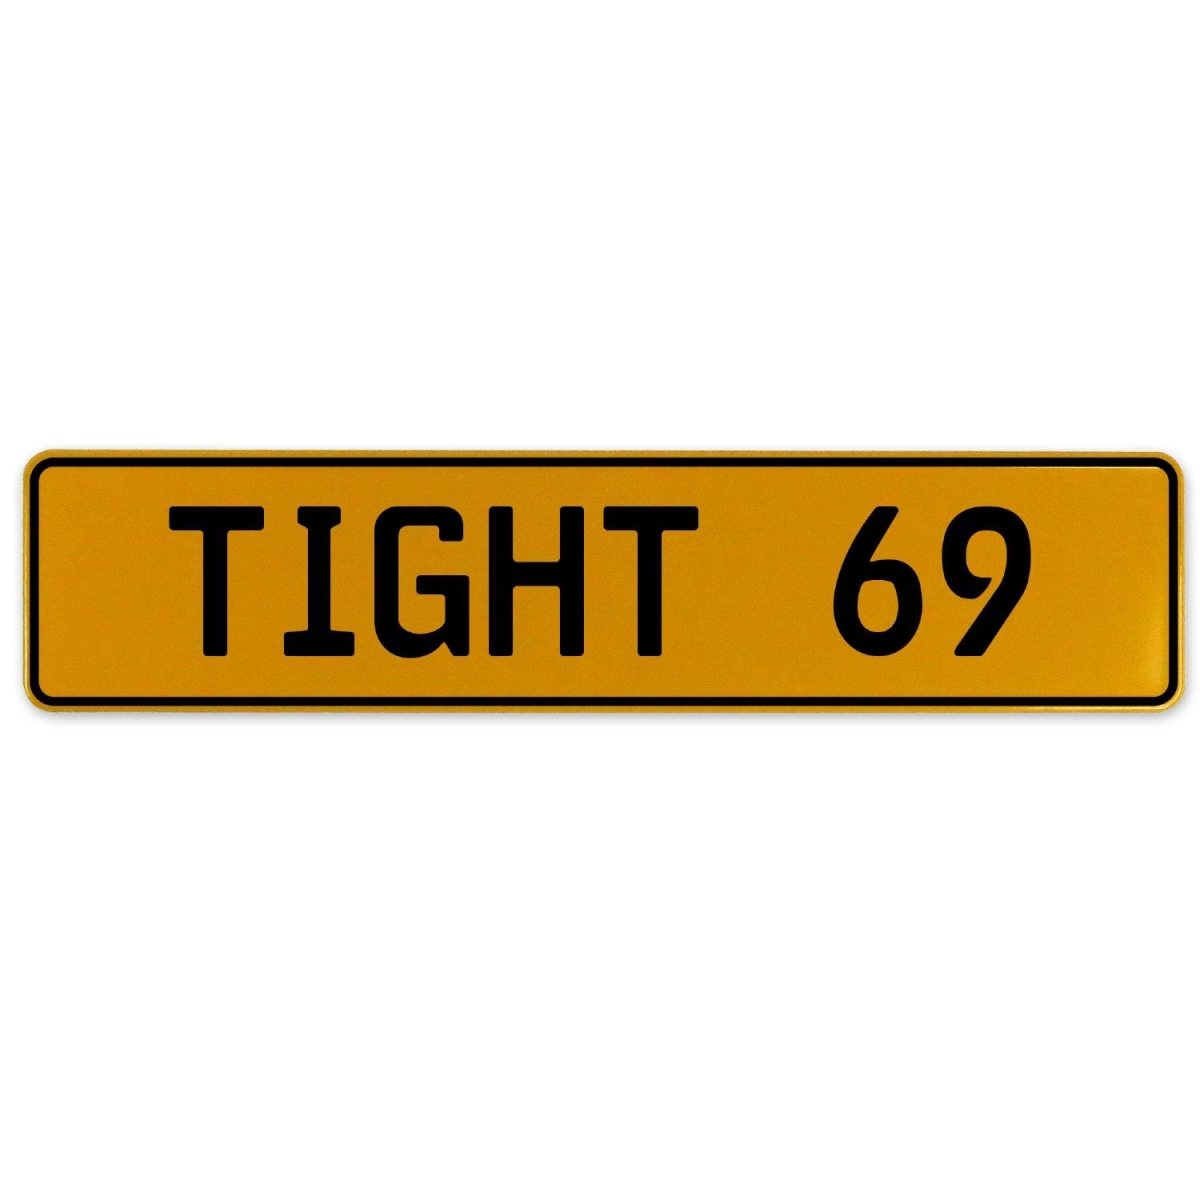 Tight 69 - Yellow Aluminum Street Sign Mancave Euro Plate Name Door Sign Wall